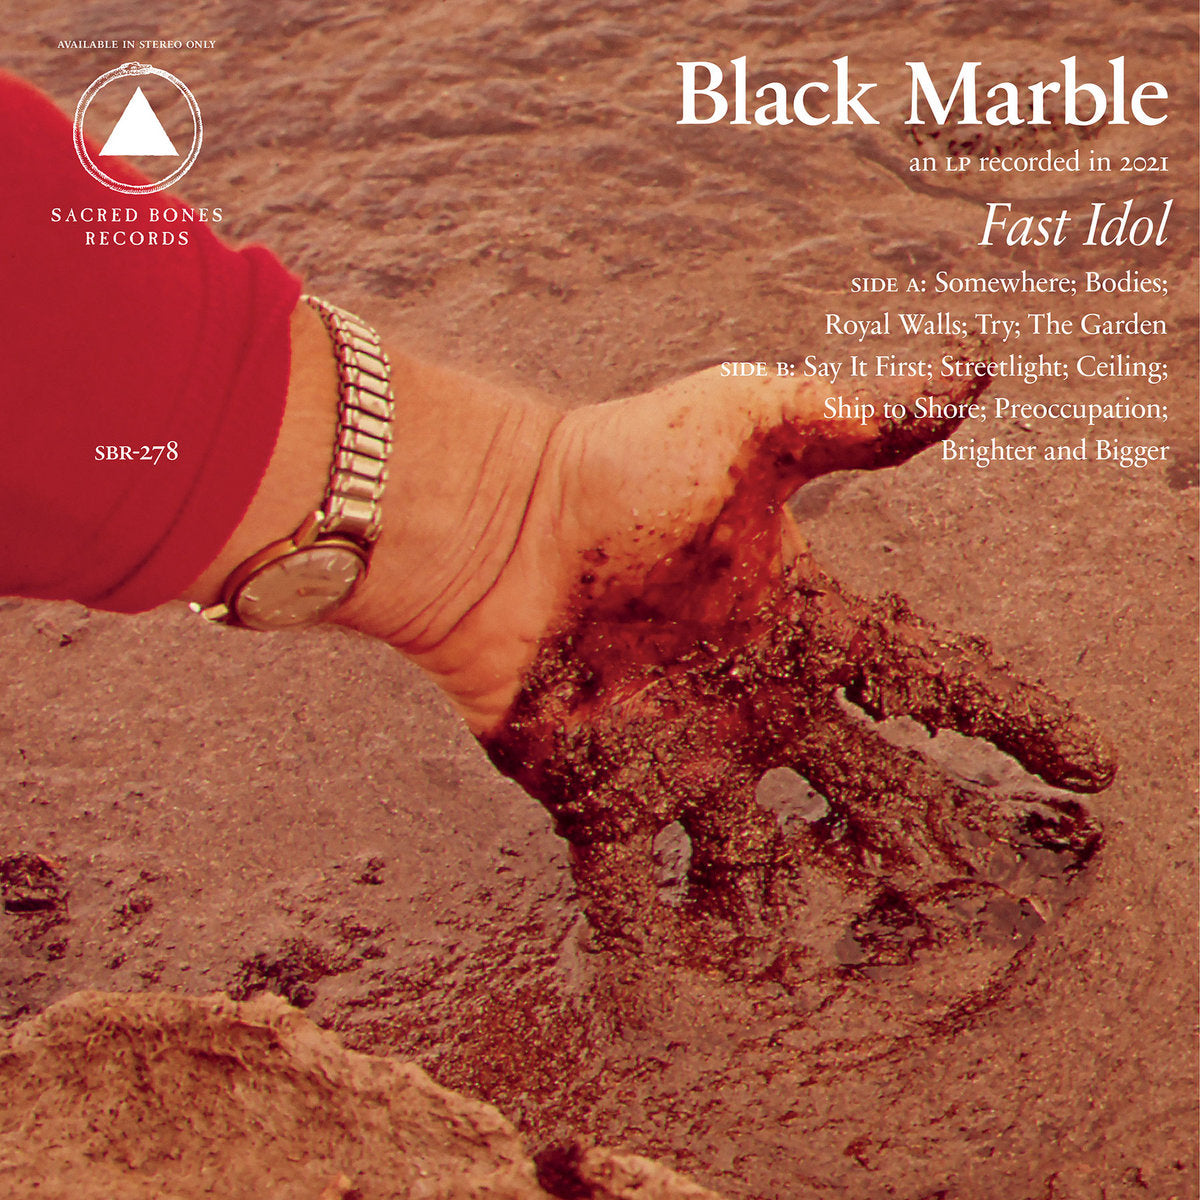 BLACK MARBLE - "FAST IDOL" LP